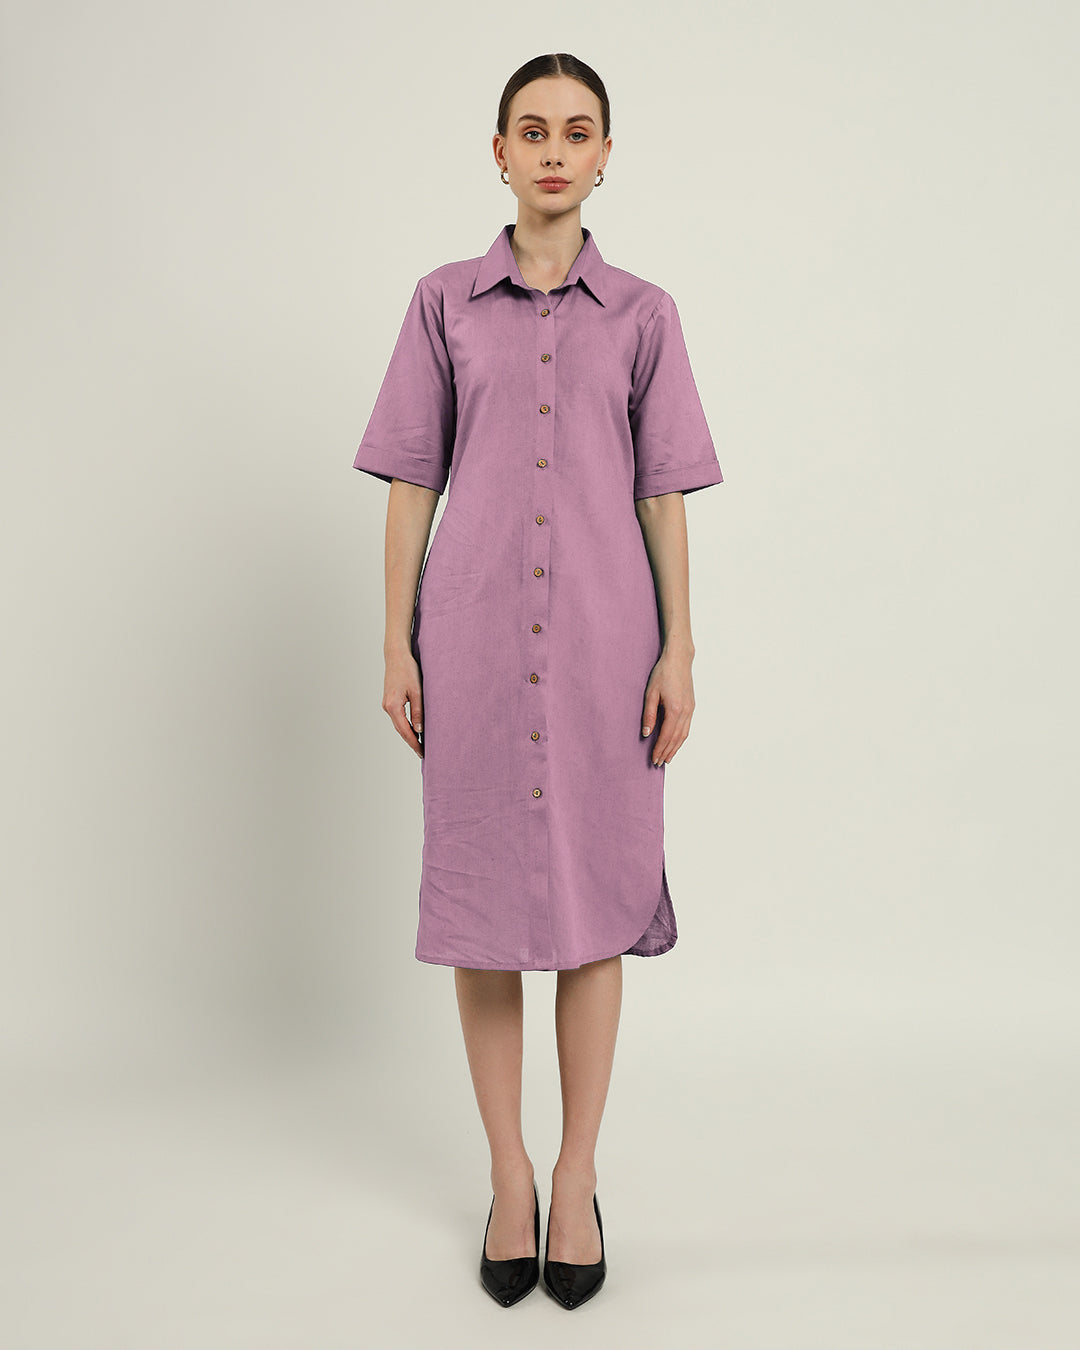 The Tampa Purple Swirl Cotton Dress